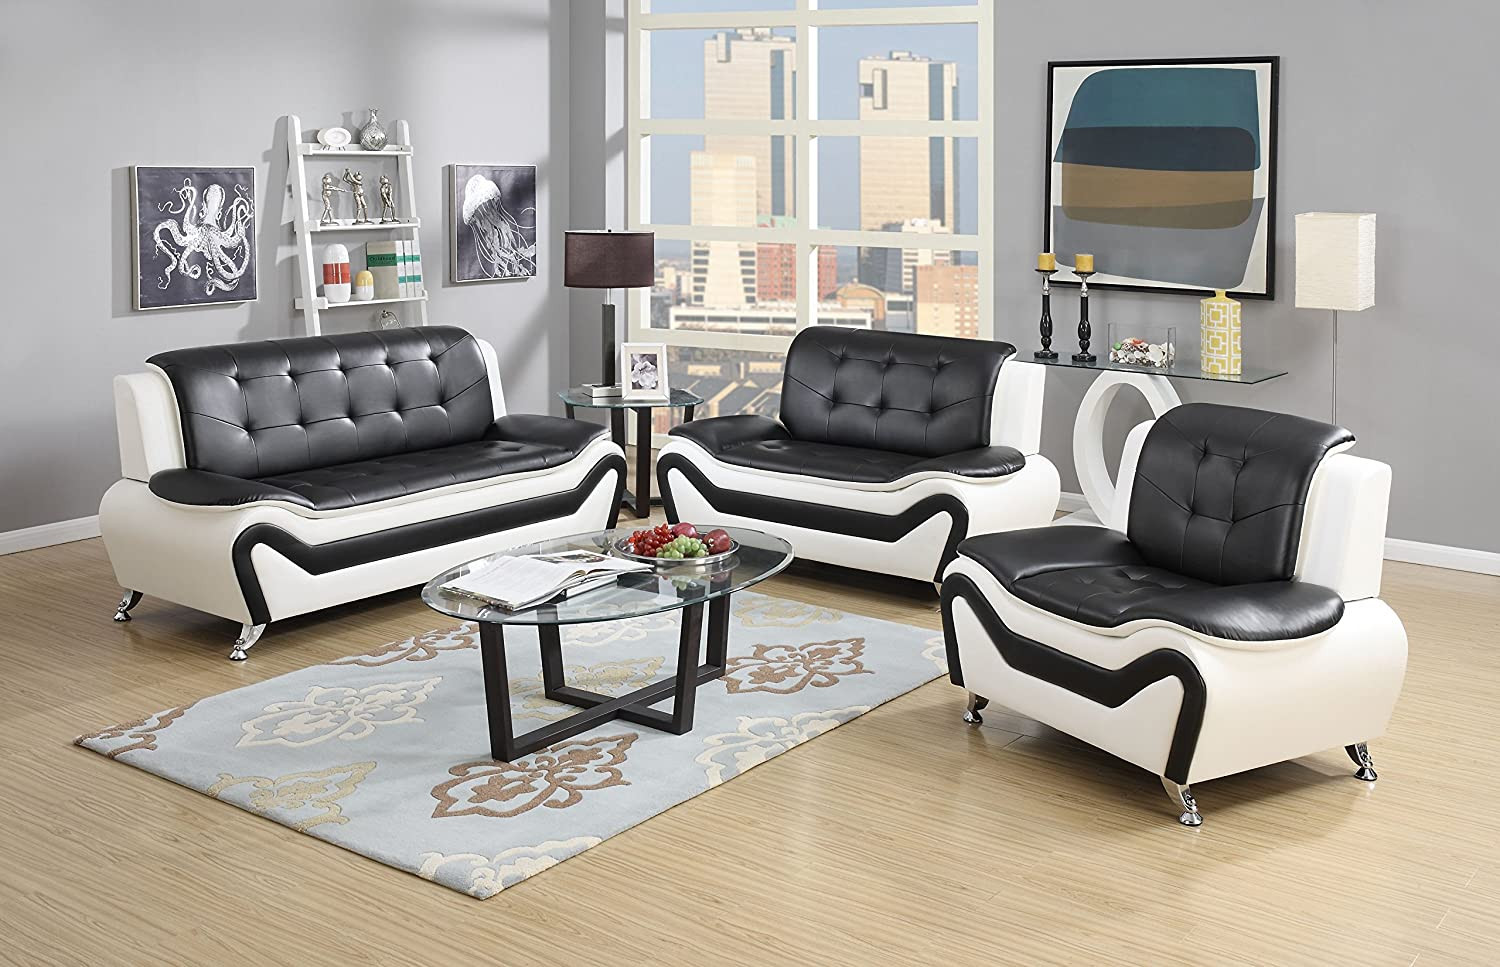 Cheap Modern Living Room Furniture
 Cheap Living Room Sets Under 300 Best Living Room Sets